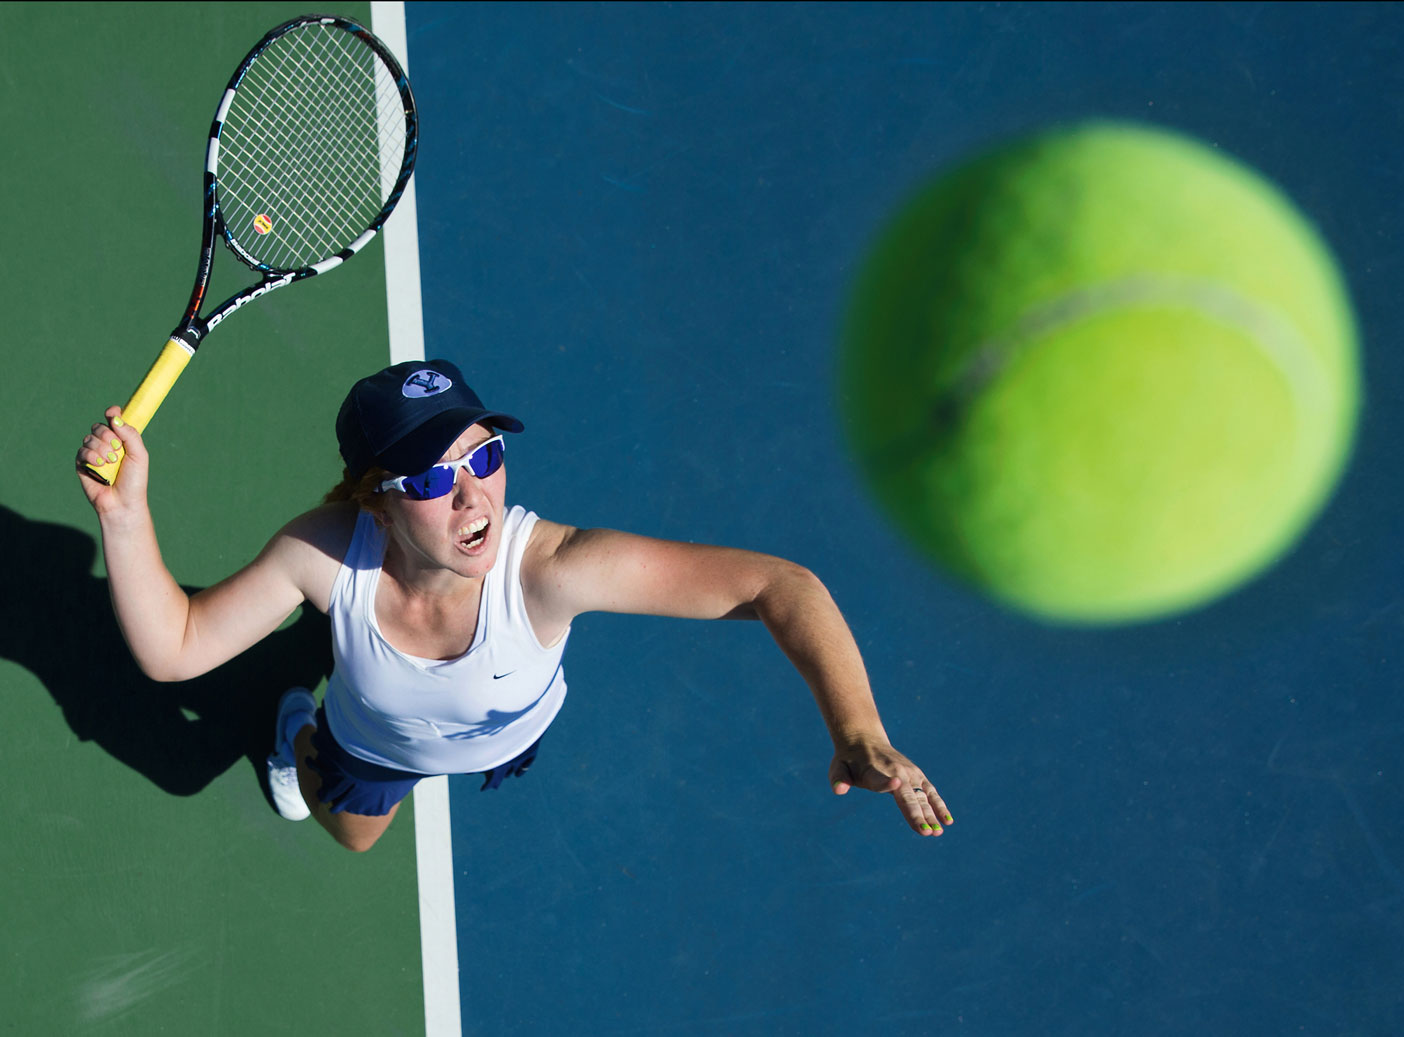 A female athlete tosses up a serve